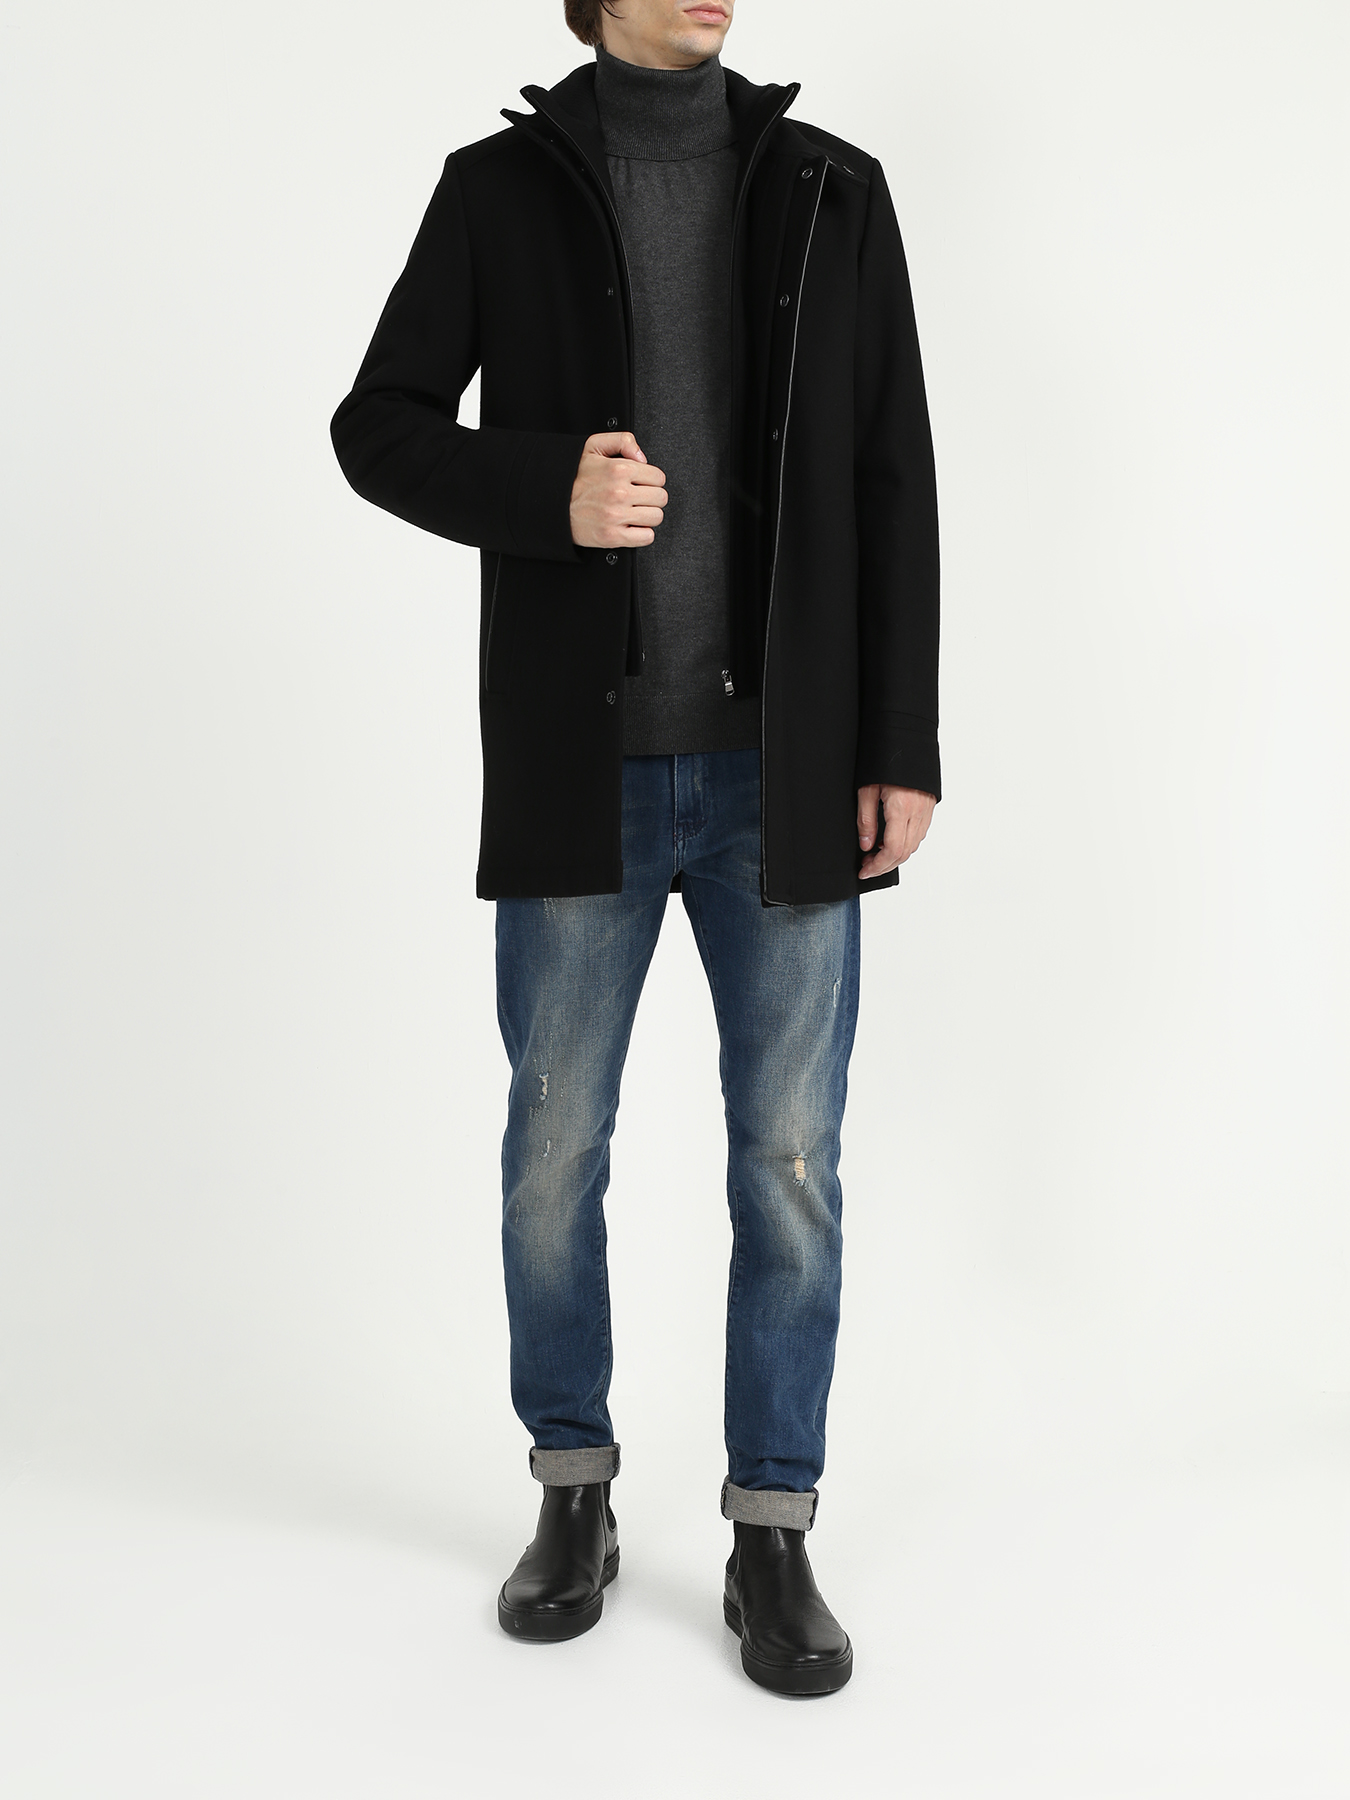 Alessandro Manzoni Jeans Классическое пальто 313431-027